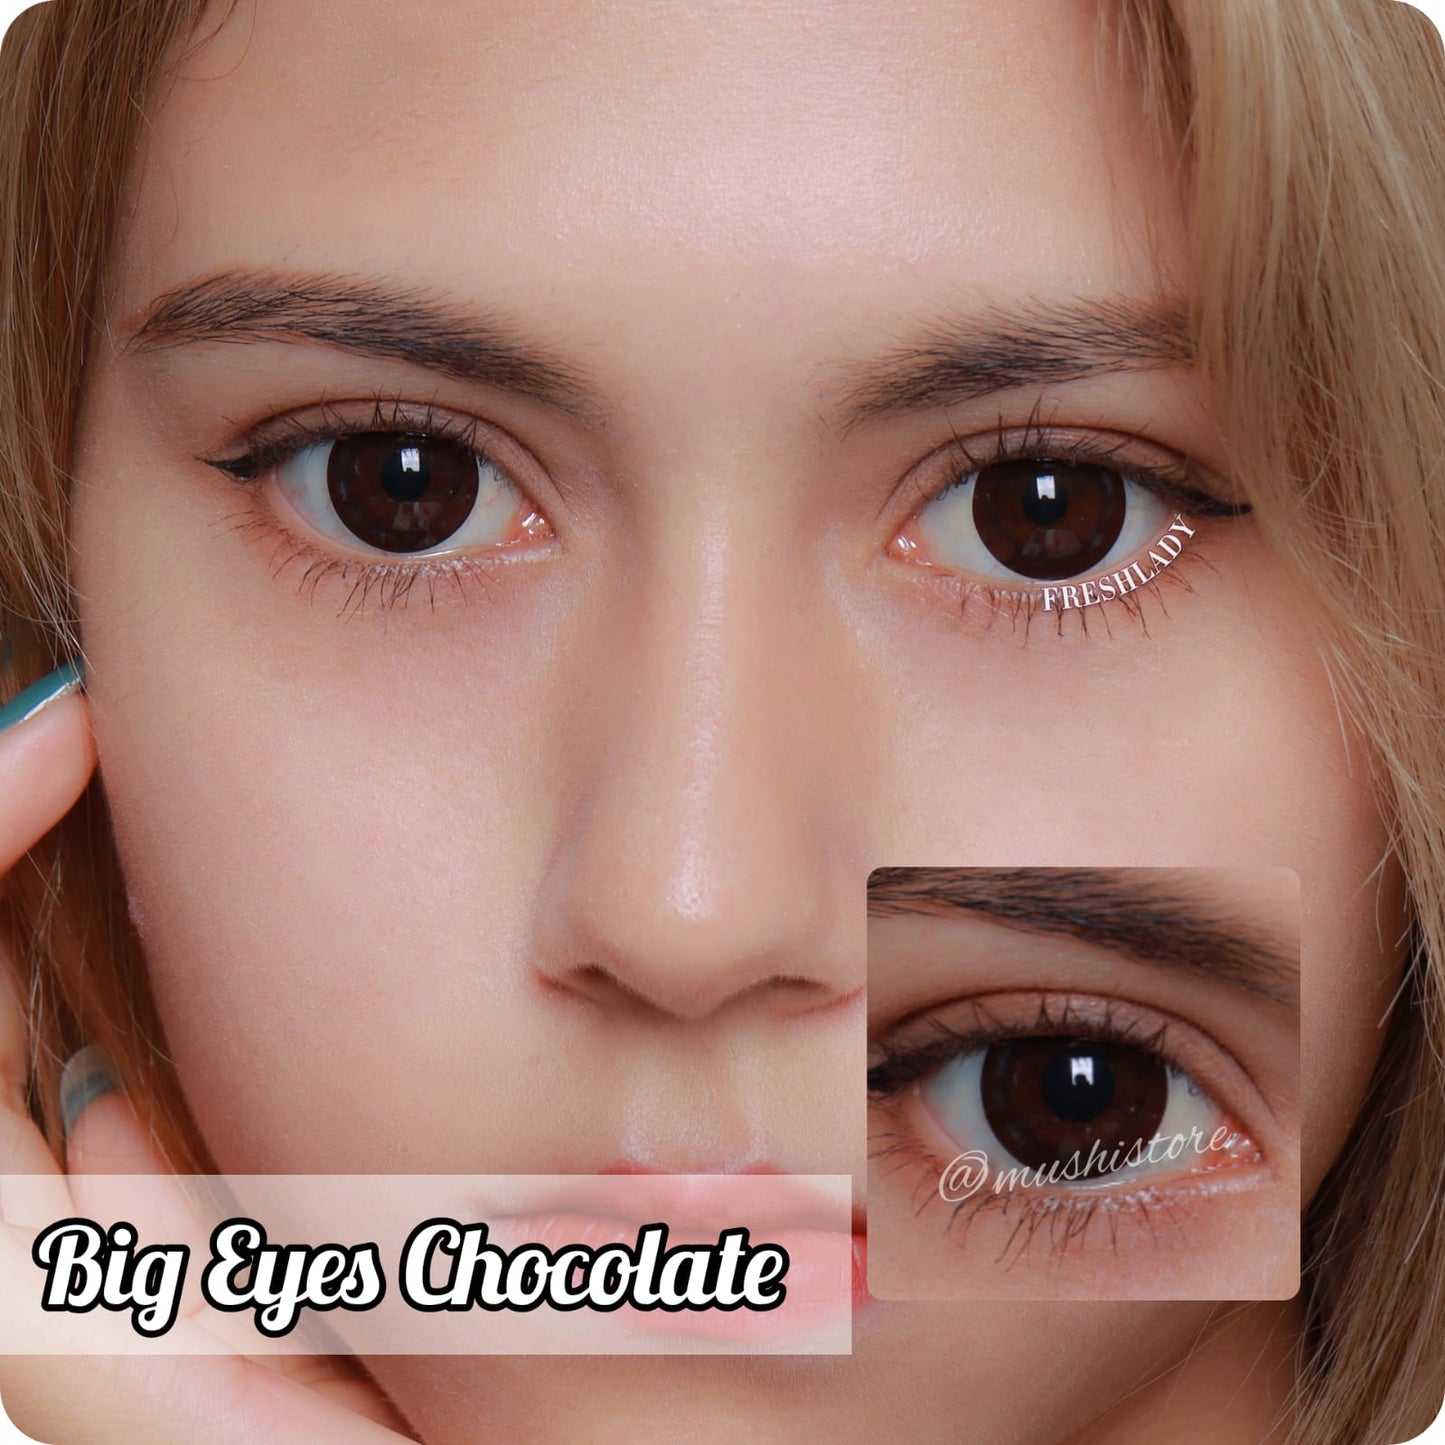 Big Eyes Chocolate